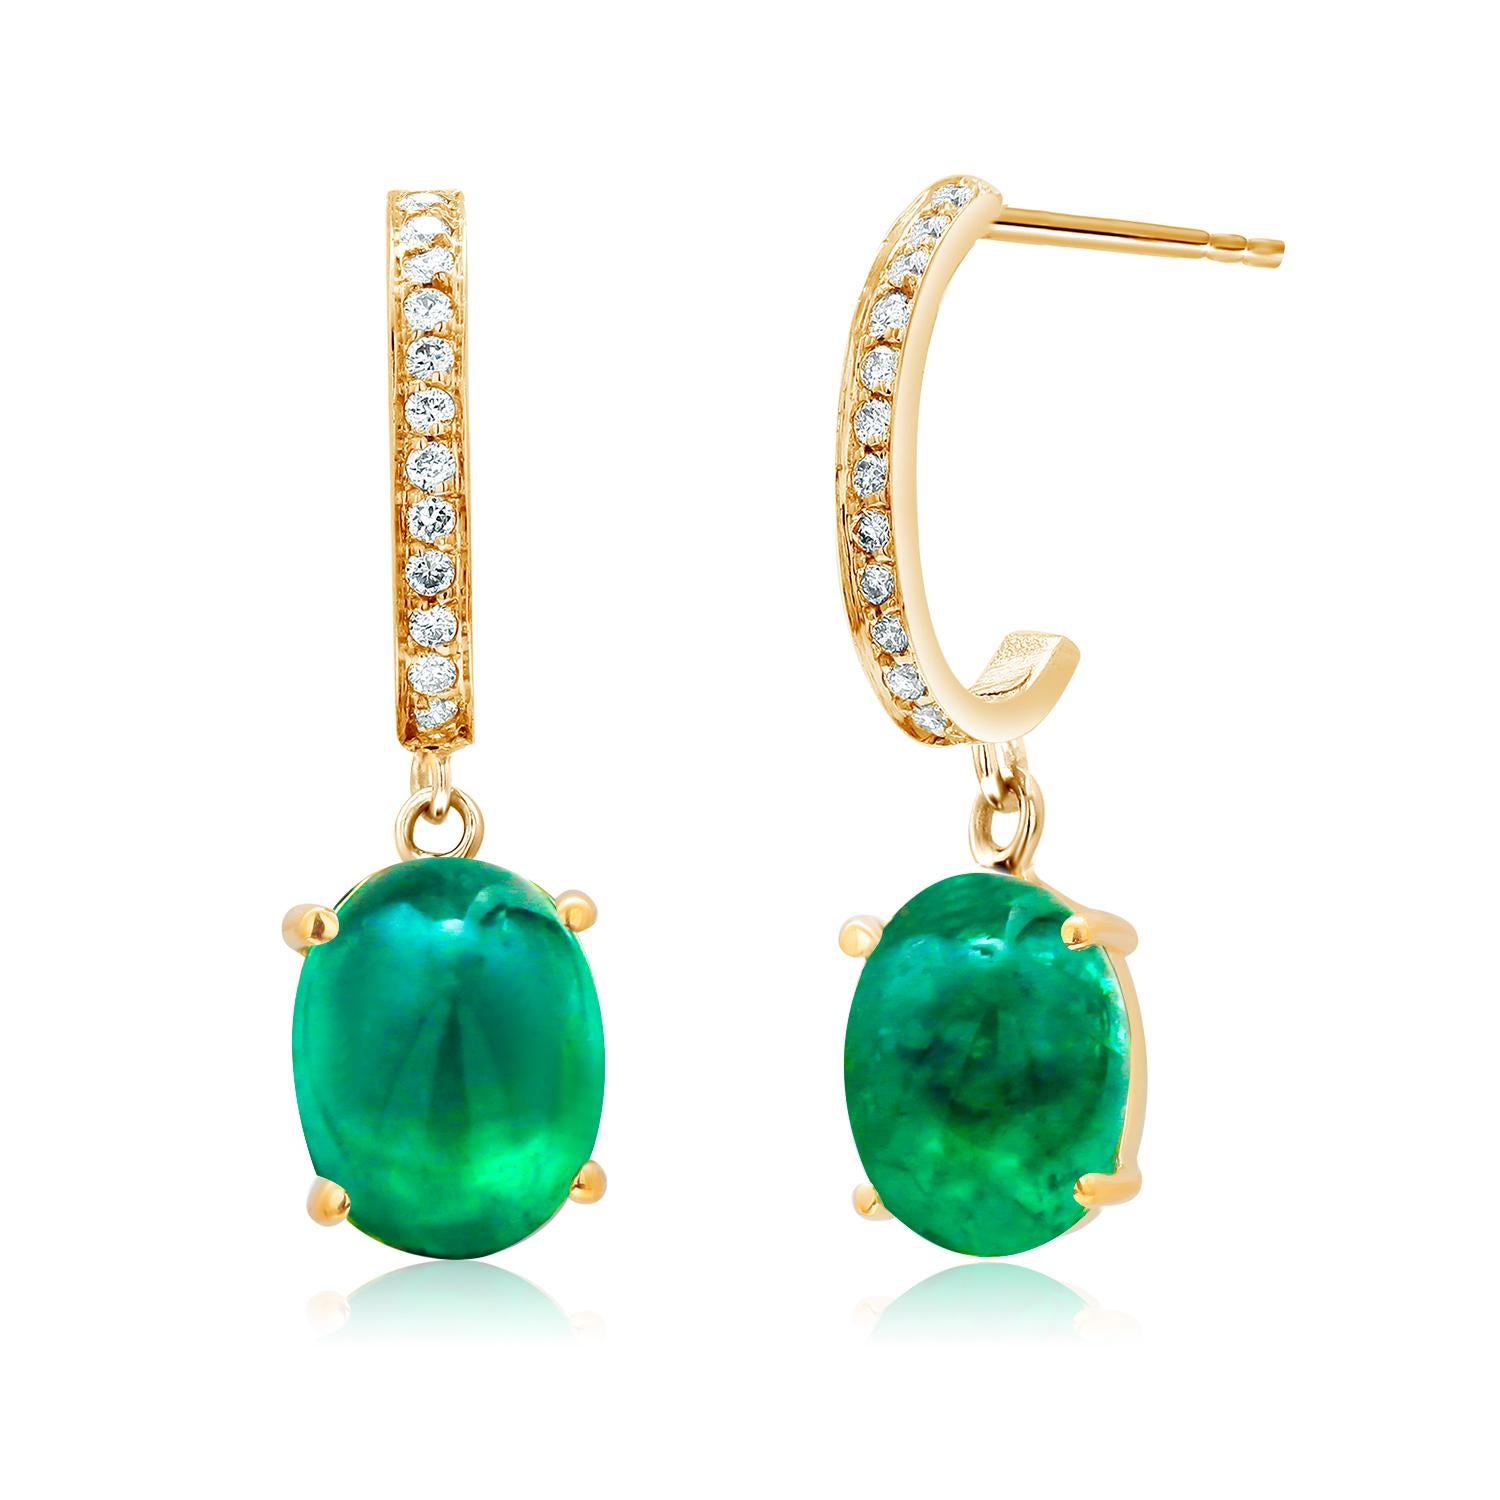 Oval Cut Cabochon Emerald Diamond Yellow Gold Hoop Earrings Weighing 5.91 Carat